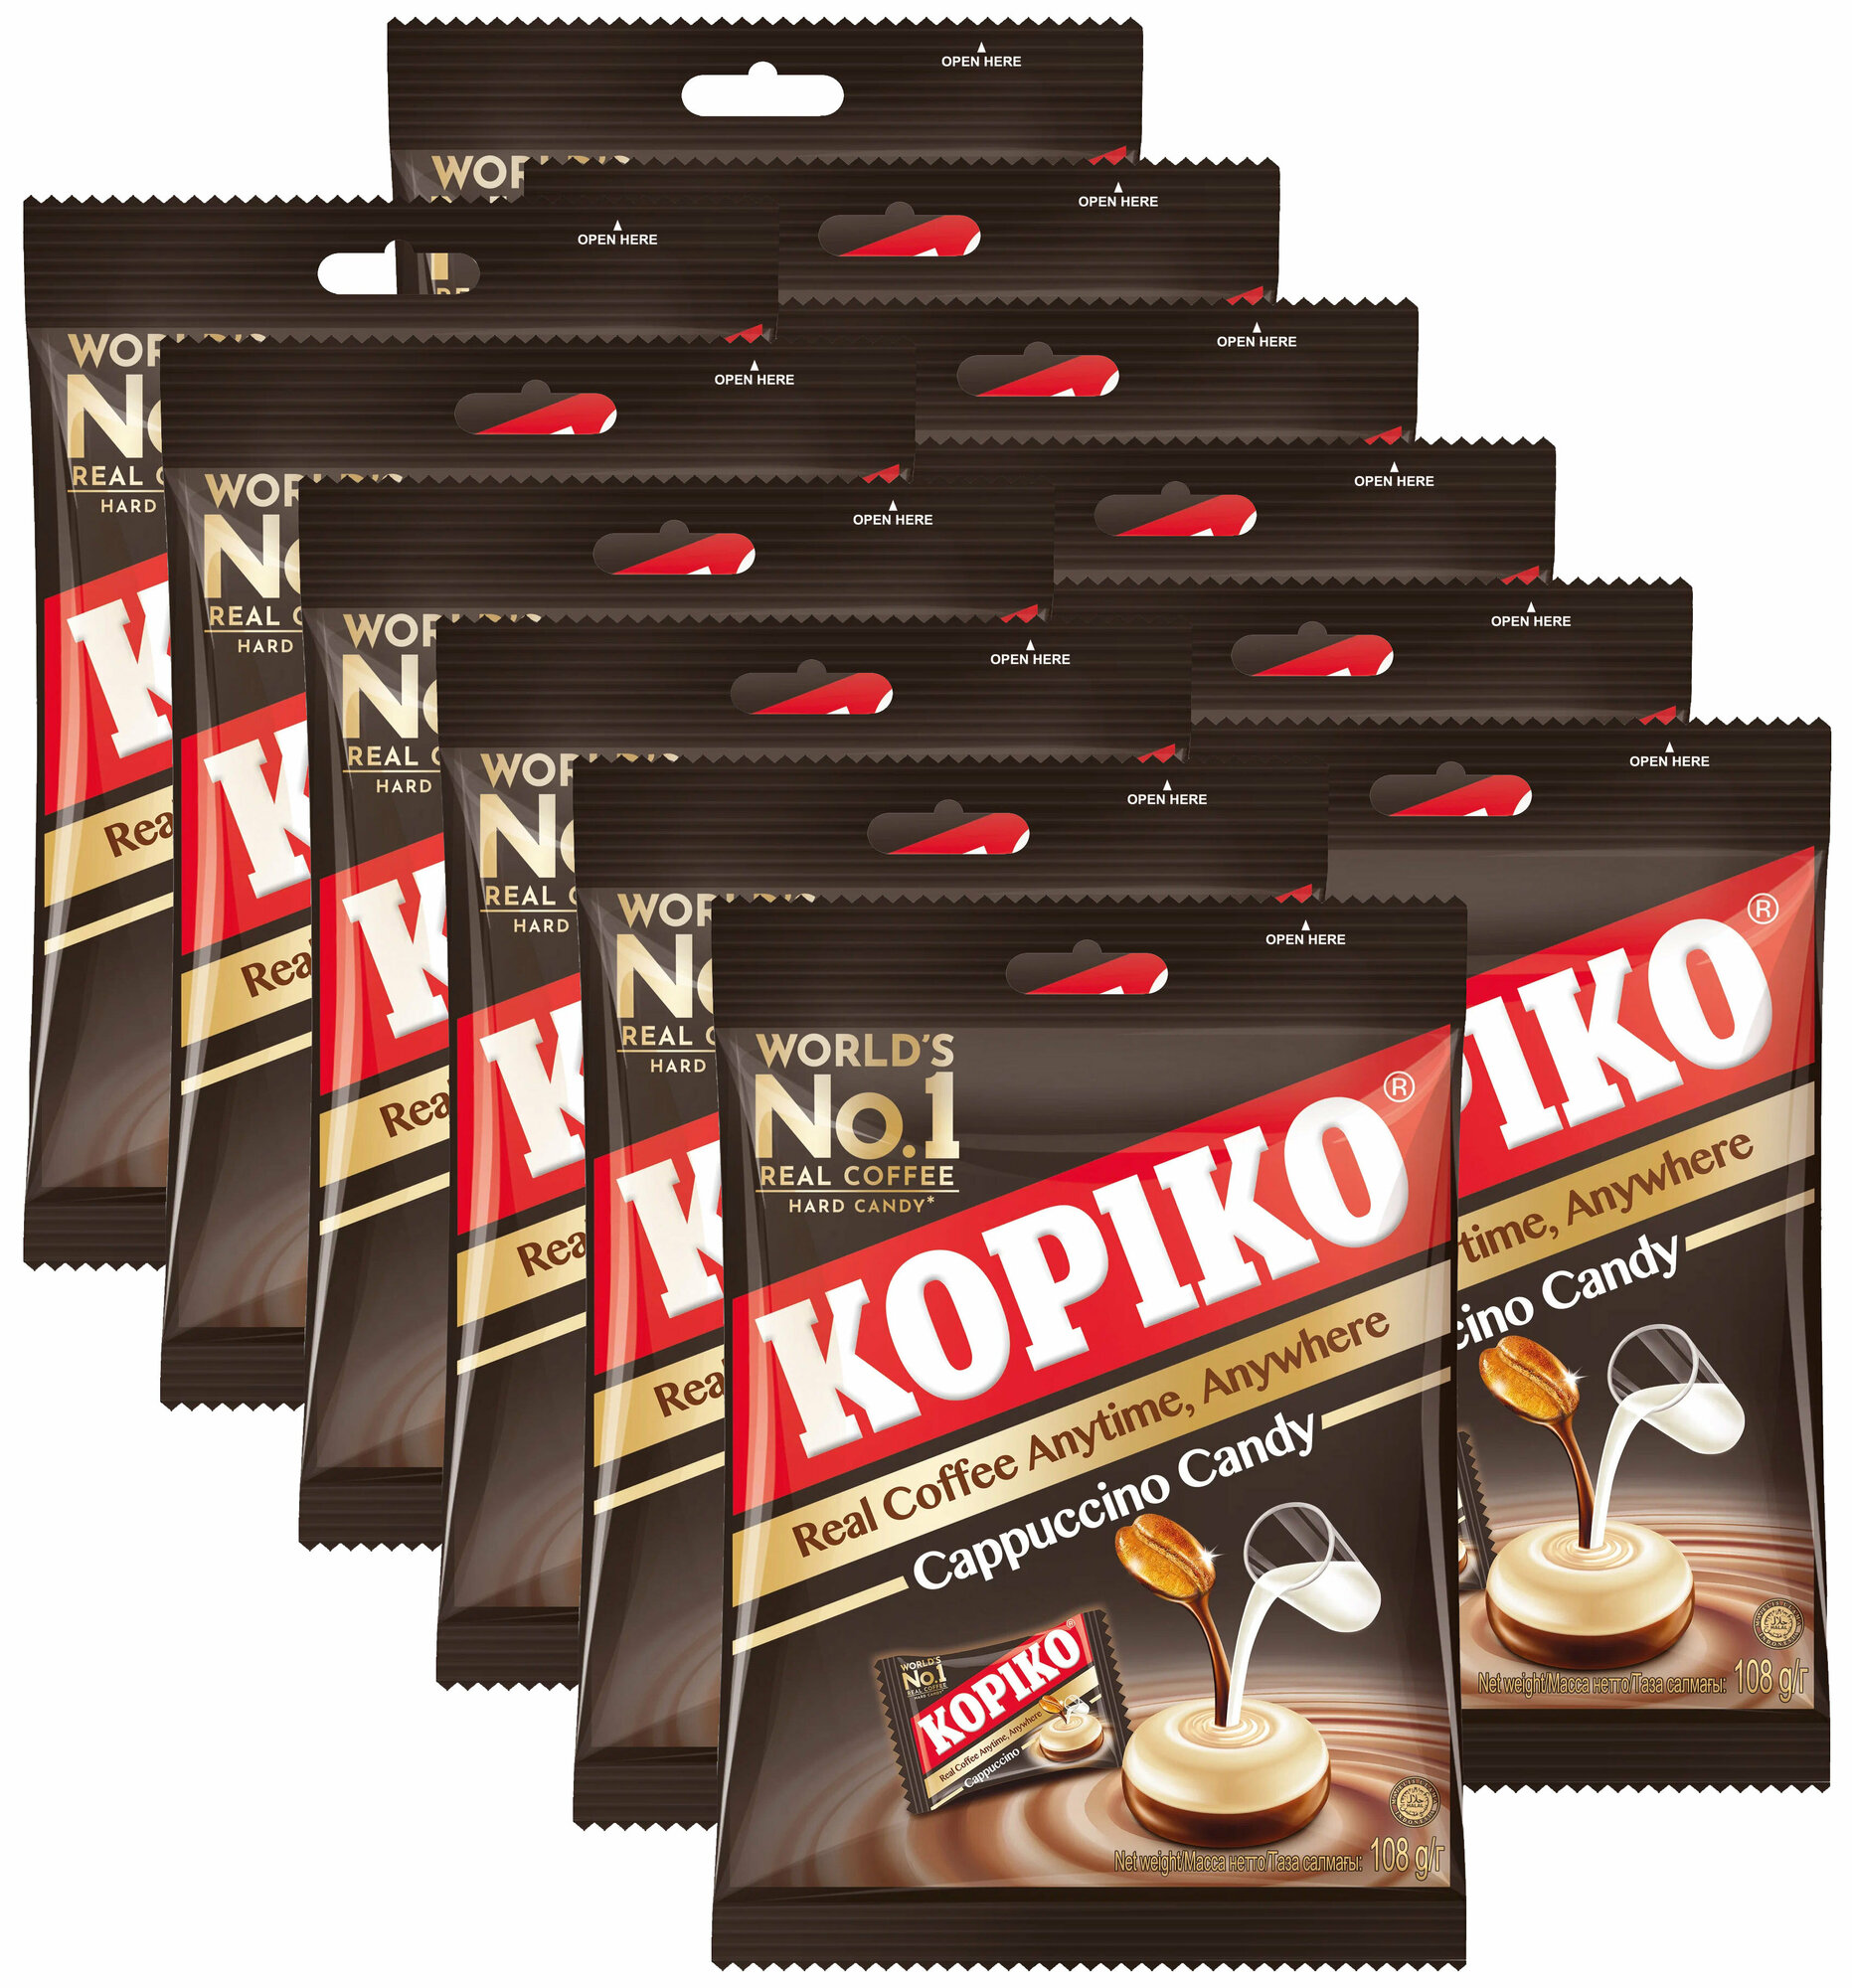 Kopiko Cappuccino Candy 108г х 6 уп Леденцы со вкусом капучино от Копико